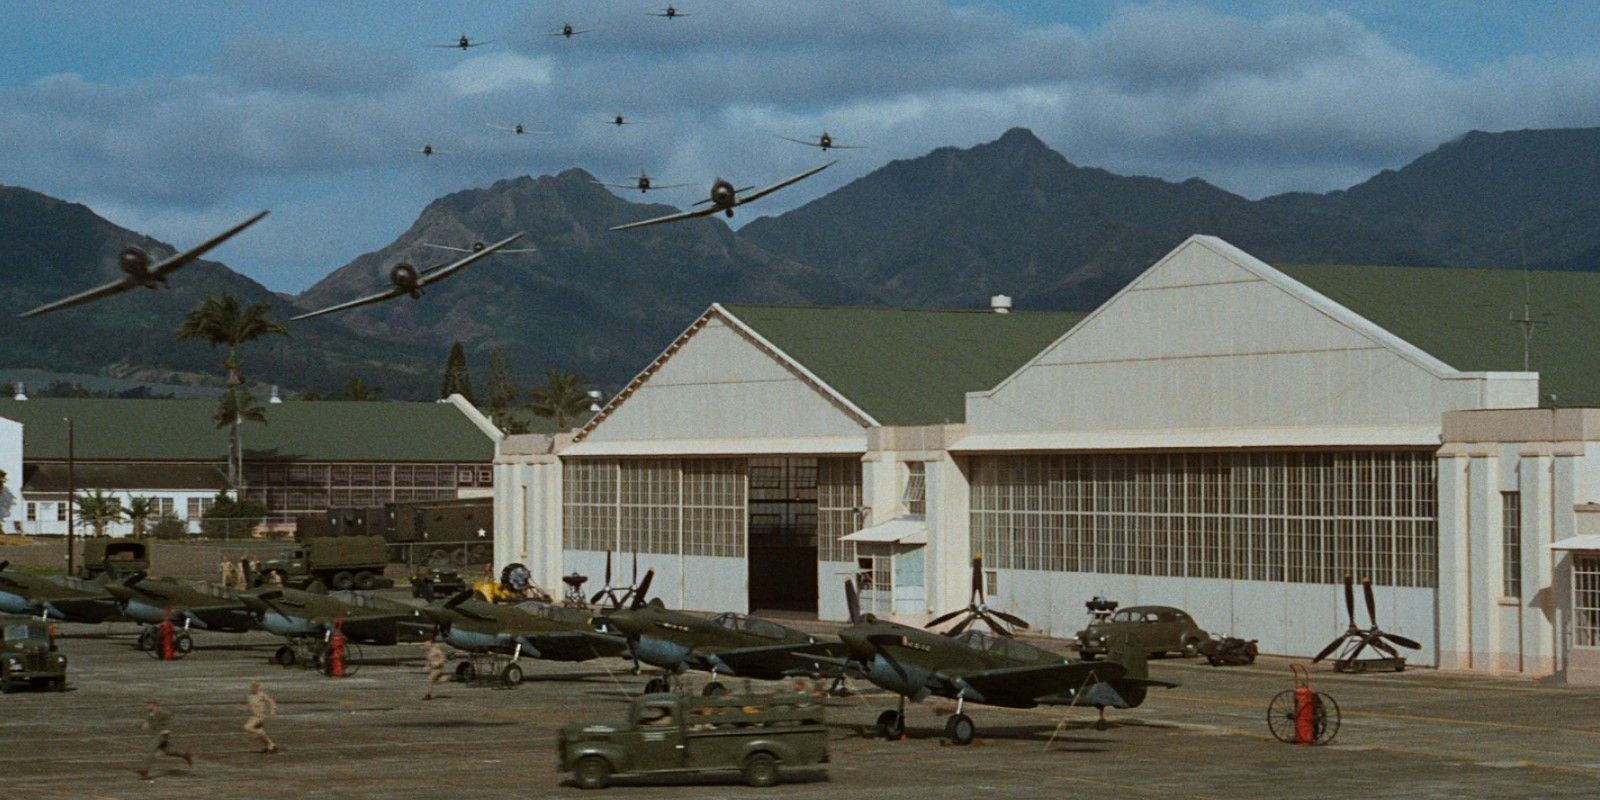 An airplane hangar in Tora Tora Tora